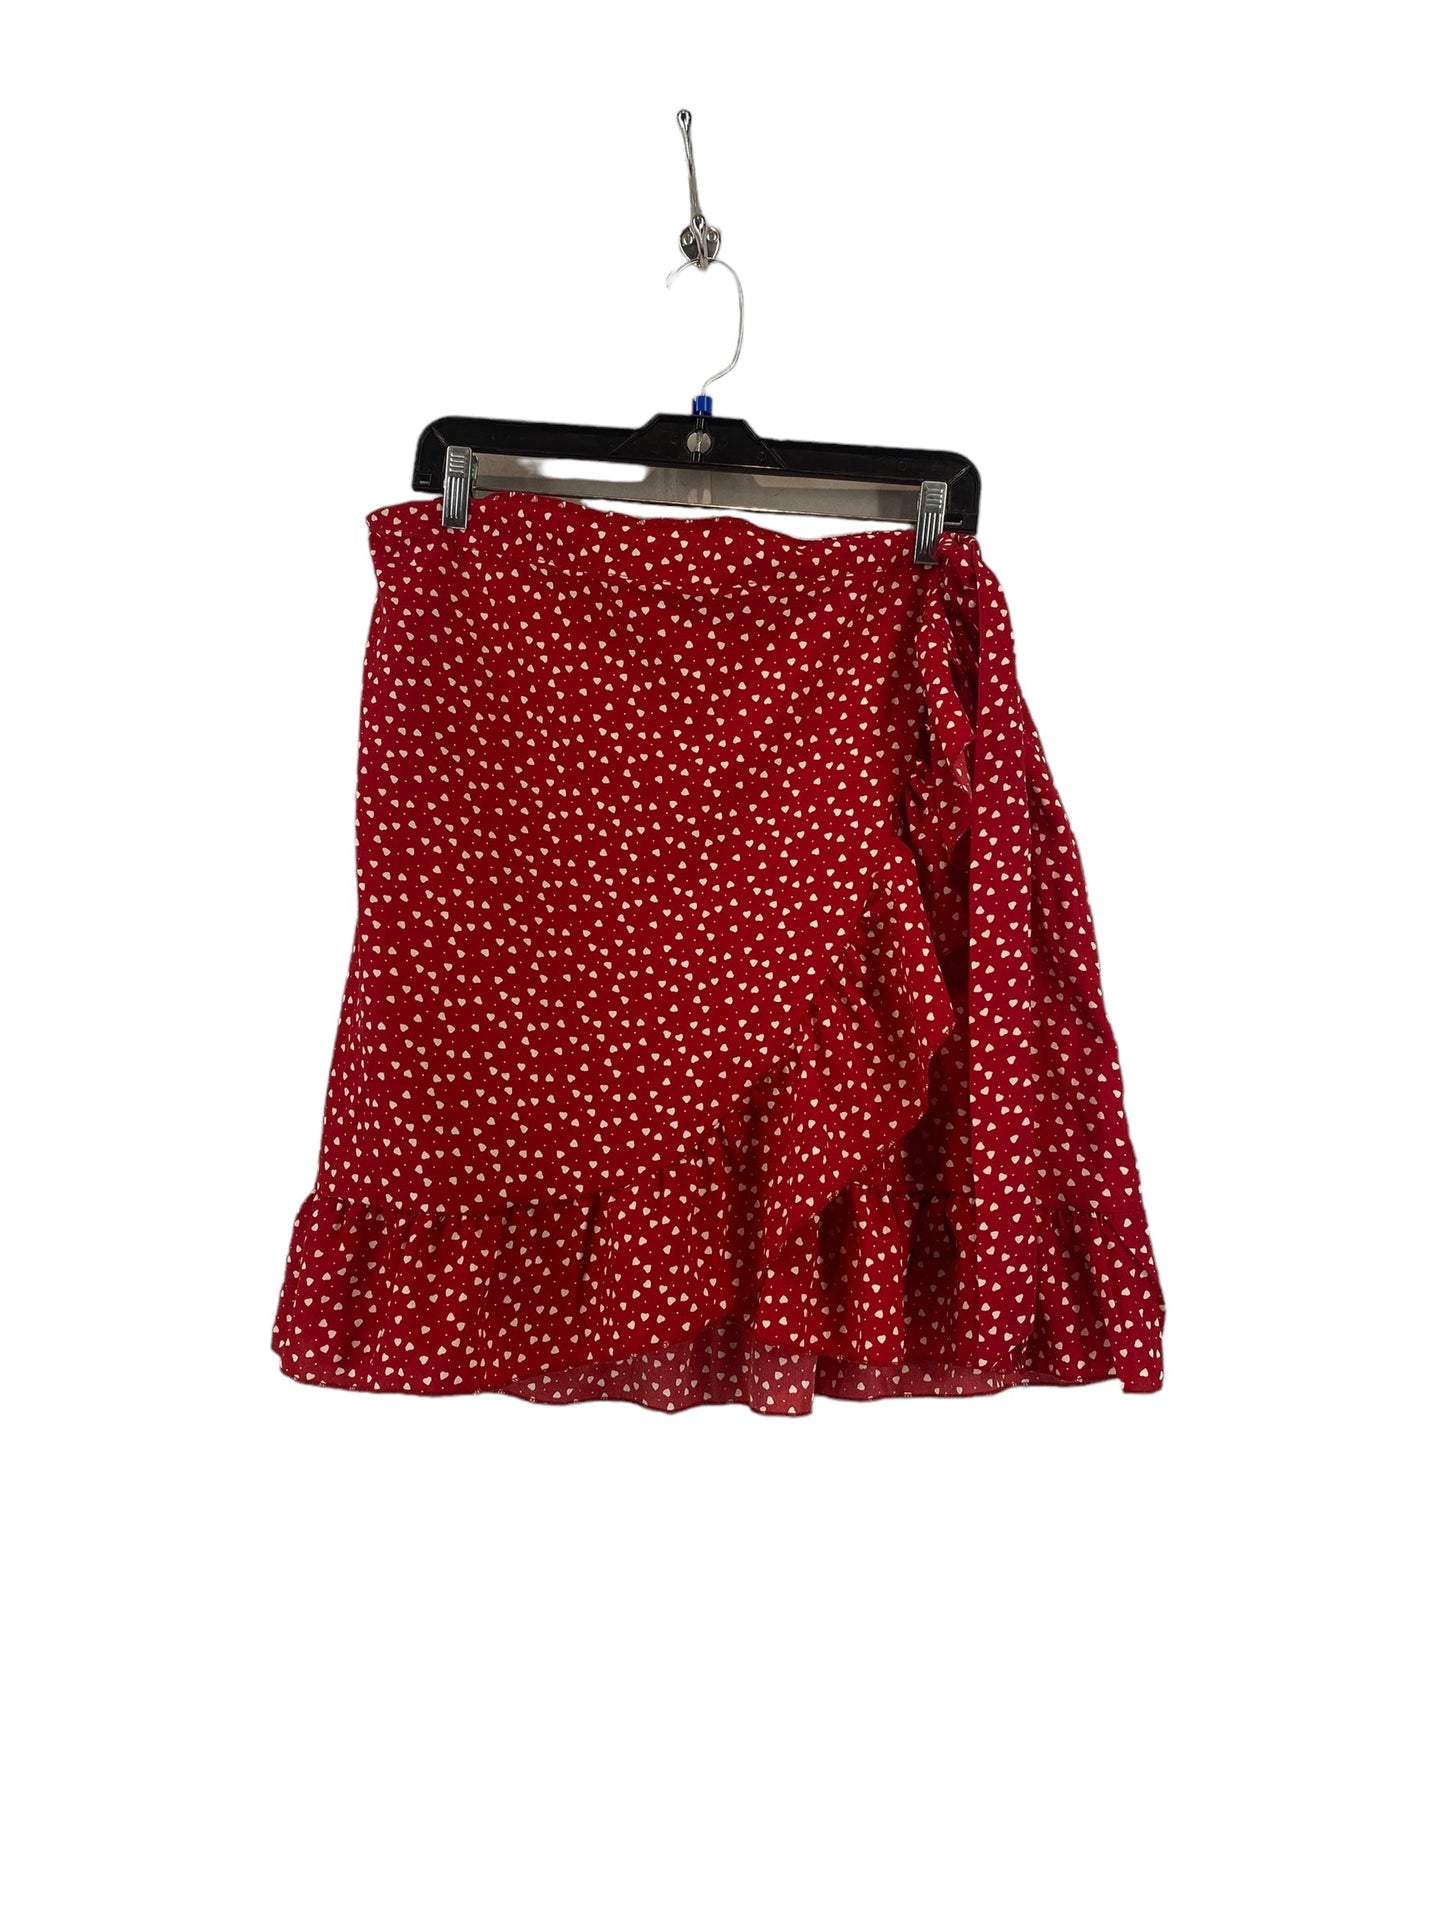 Skirt Mini & Short By Shein  Size: 2x